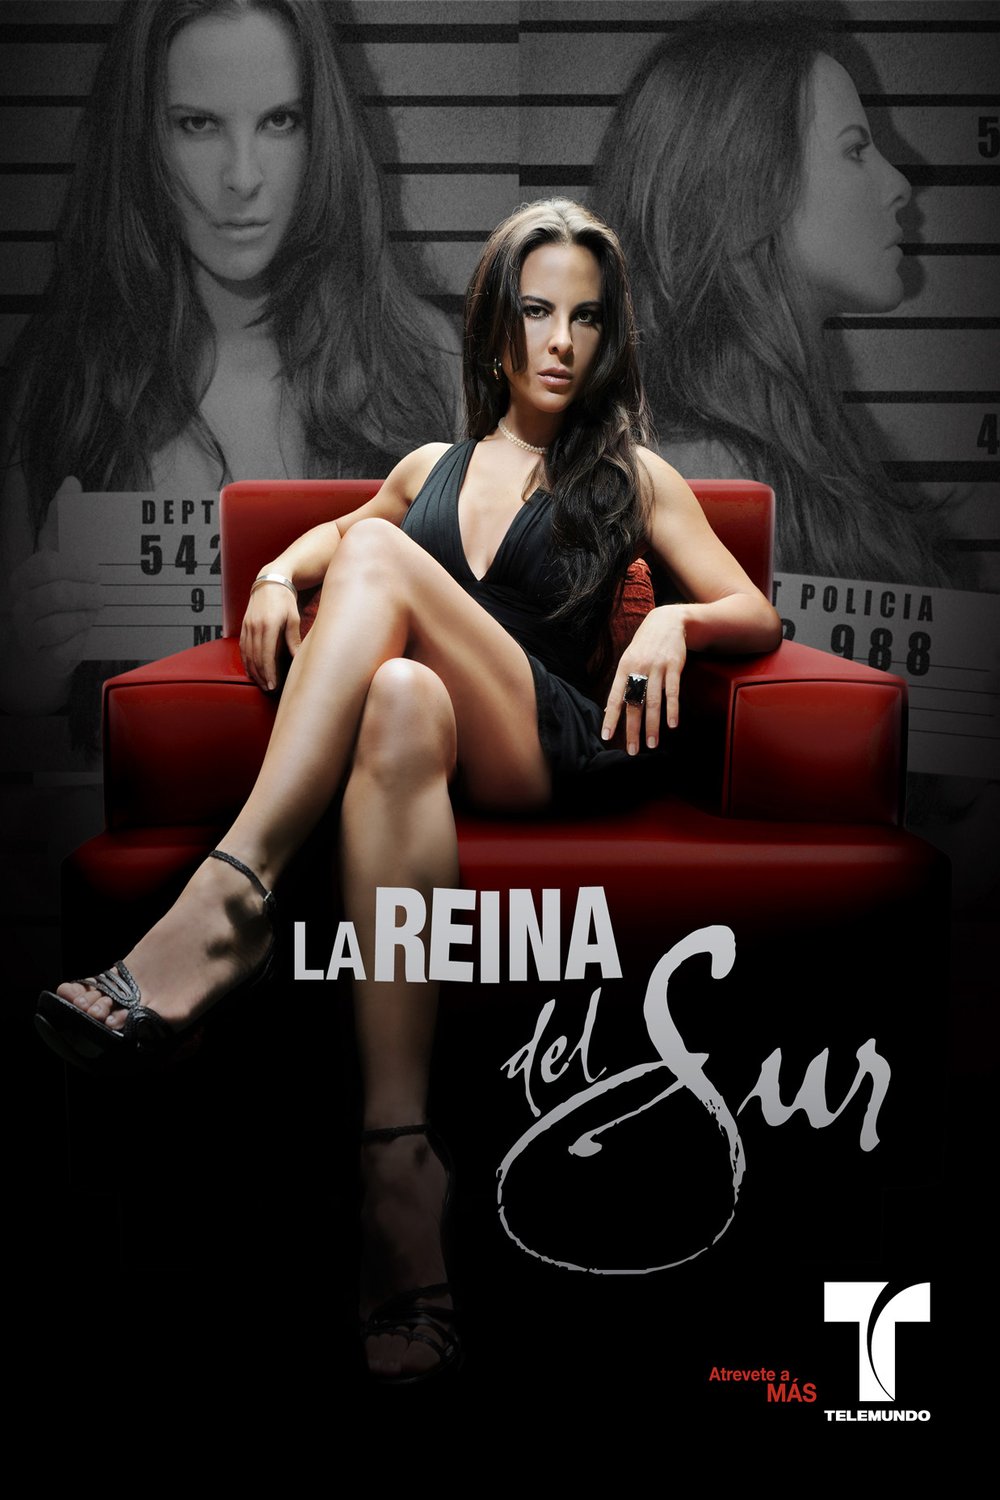 Spanish poster of the movie La Reina del Sur